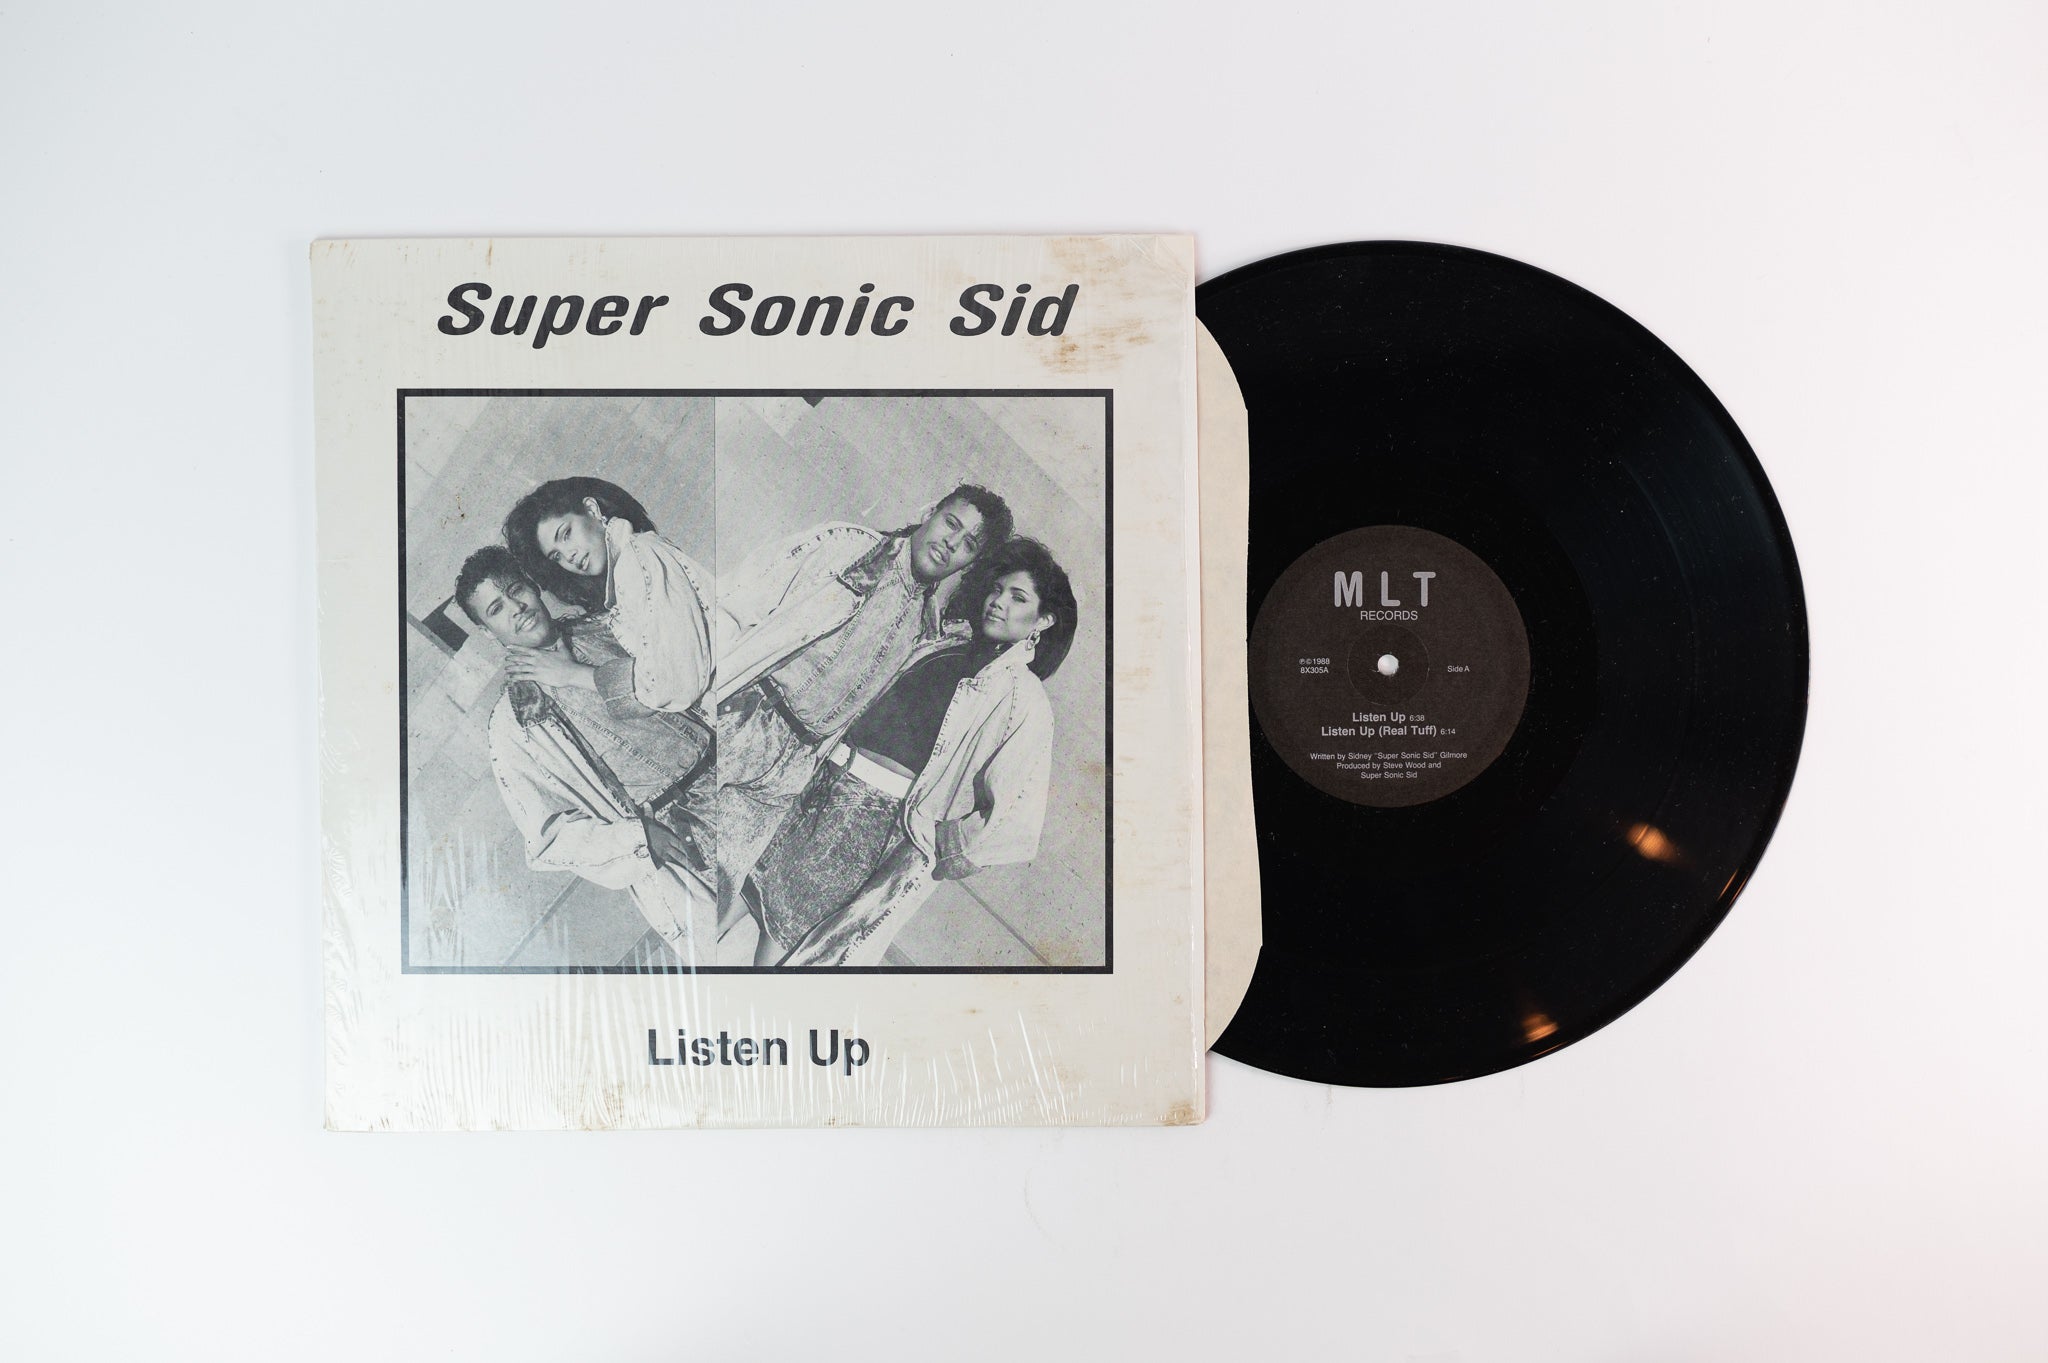 Super Sonic Sid - Listen Up on M L T